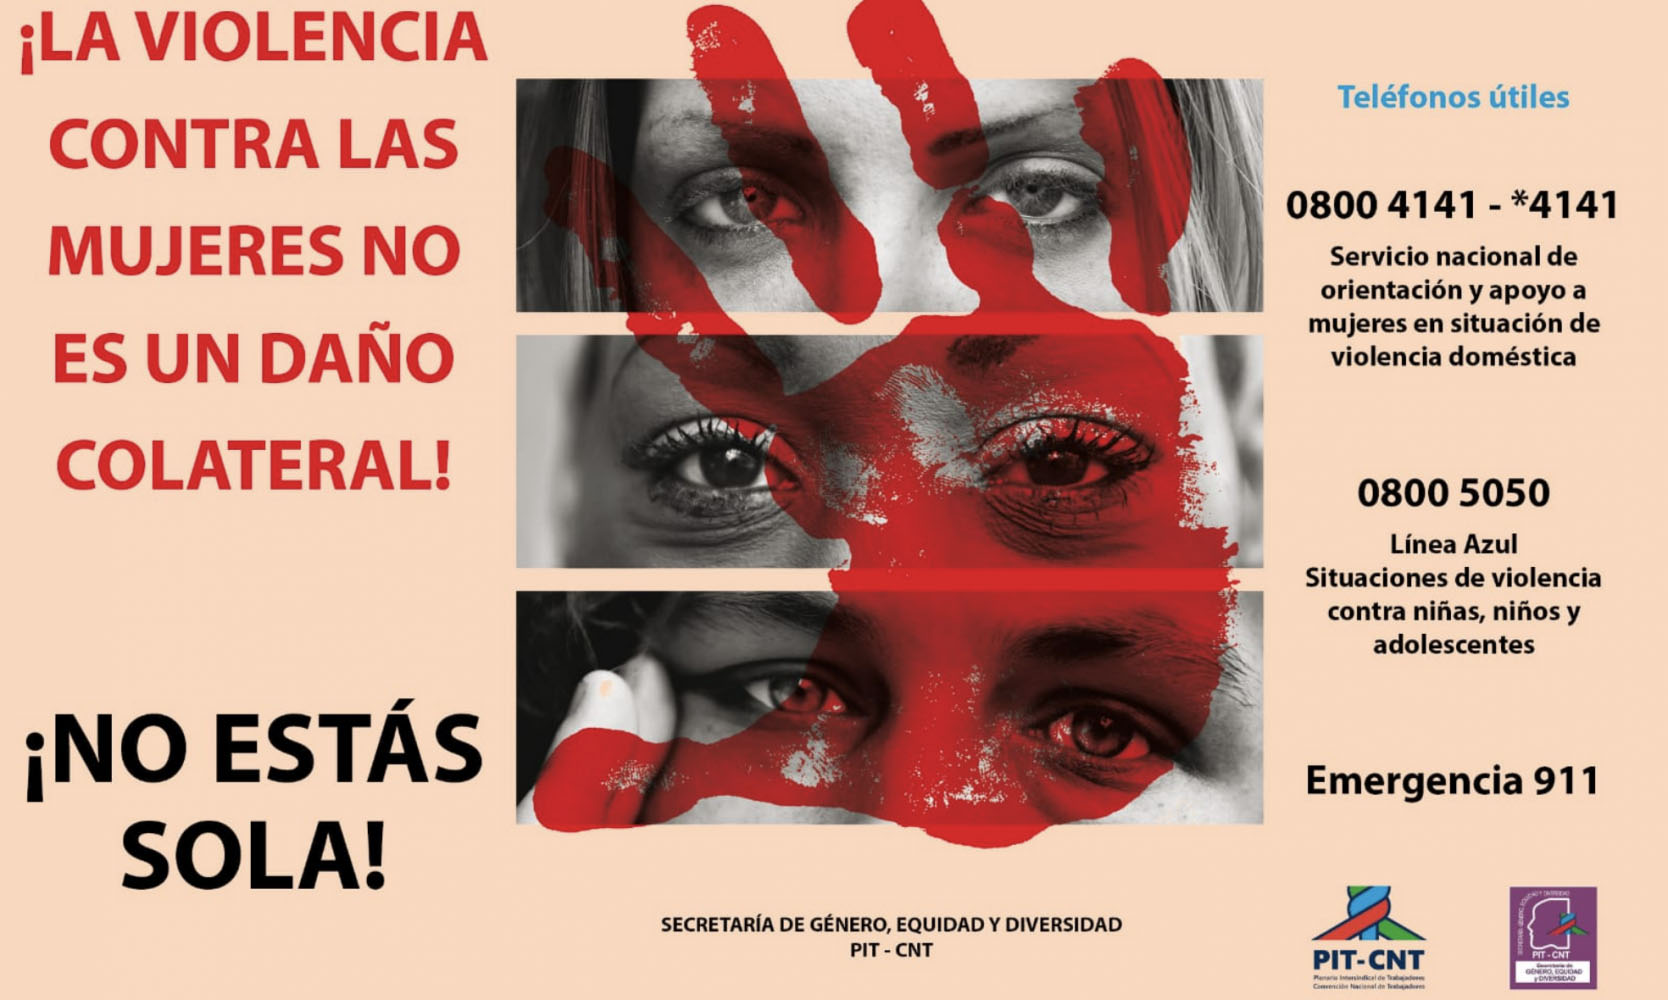 &quot;אלימות נגד נשים אינה נזק משני!&quot; הכרזה שפרסמו ארגוני העובדים באורוגוואי (מתוך אתר industriALL)